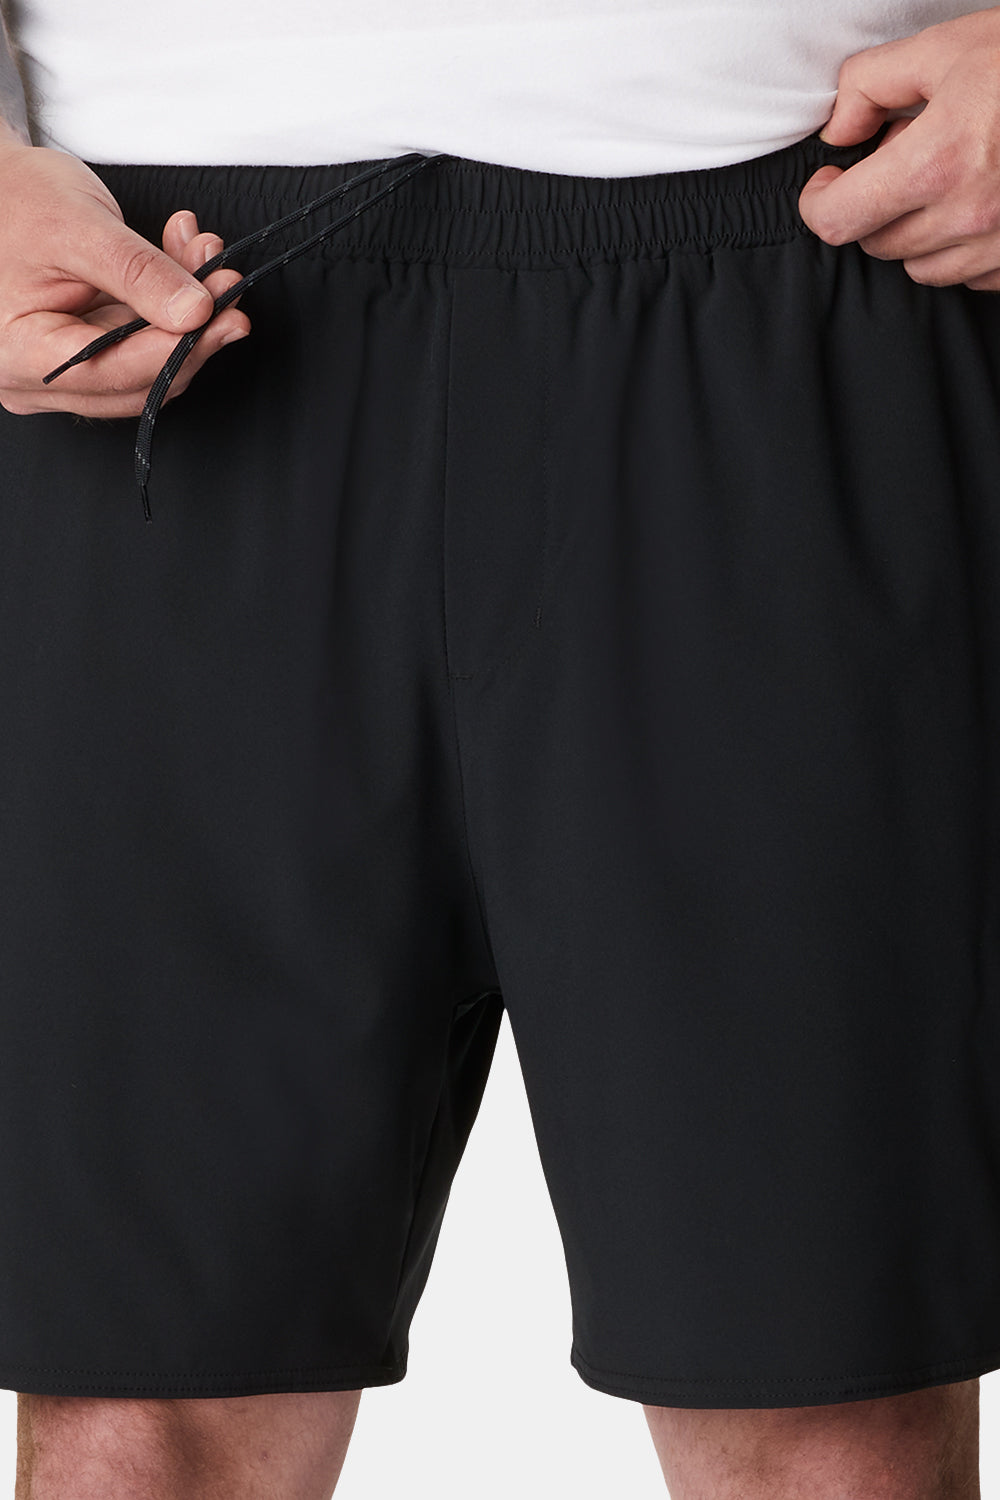 Columbia Mountaindale Shorts (Black)
